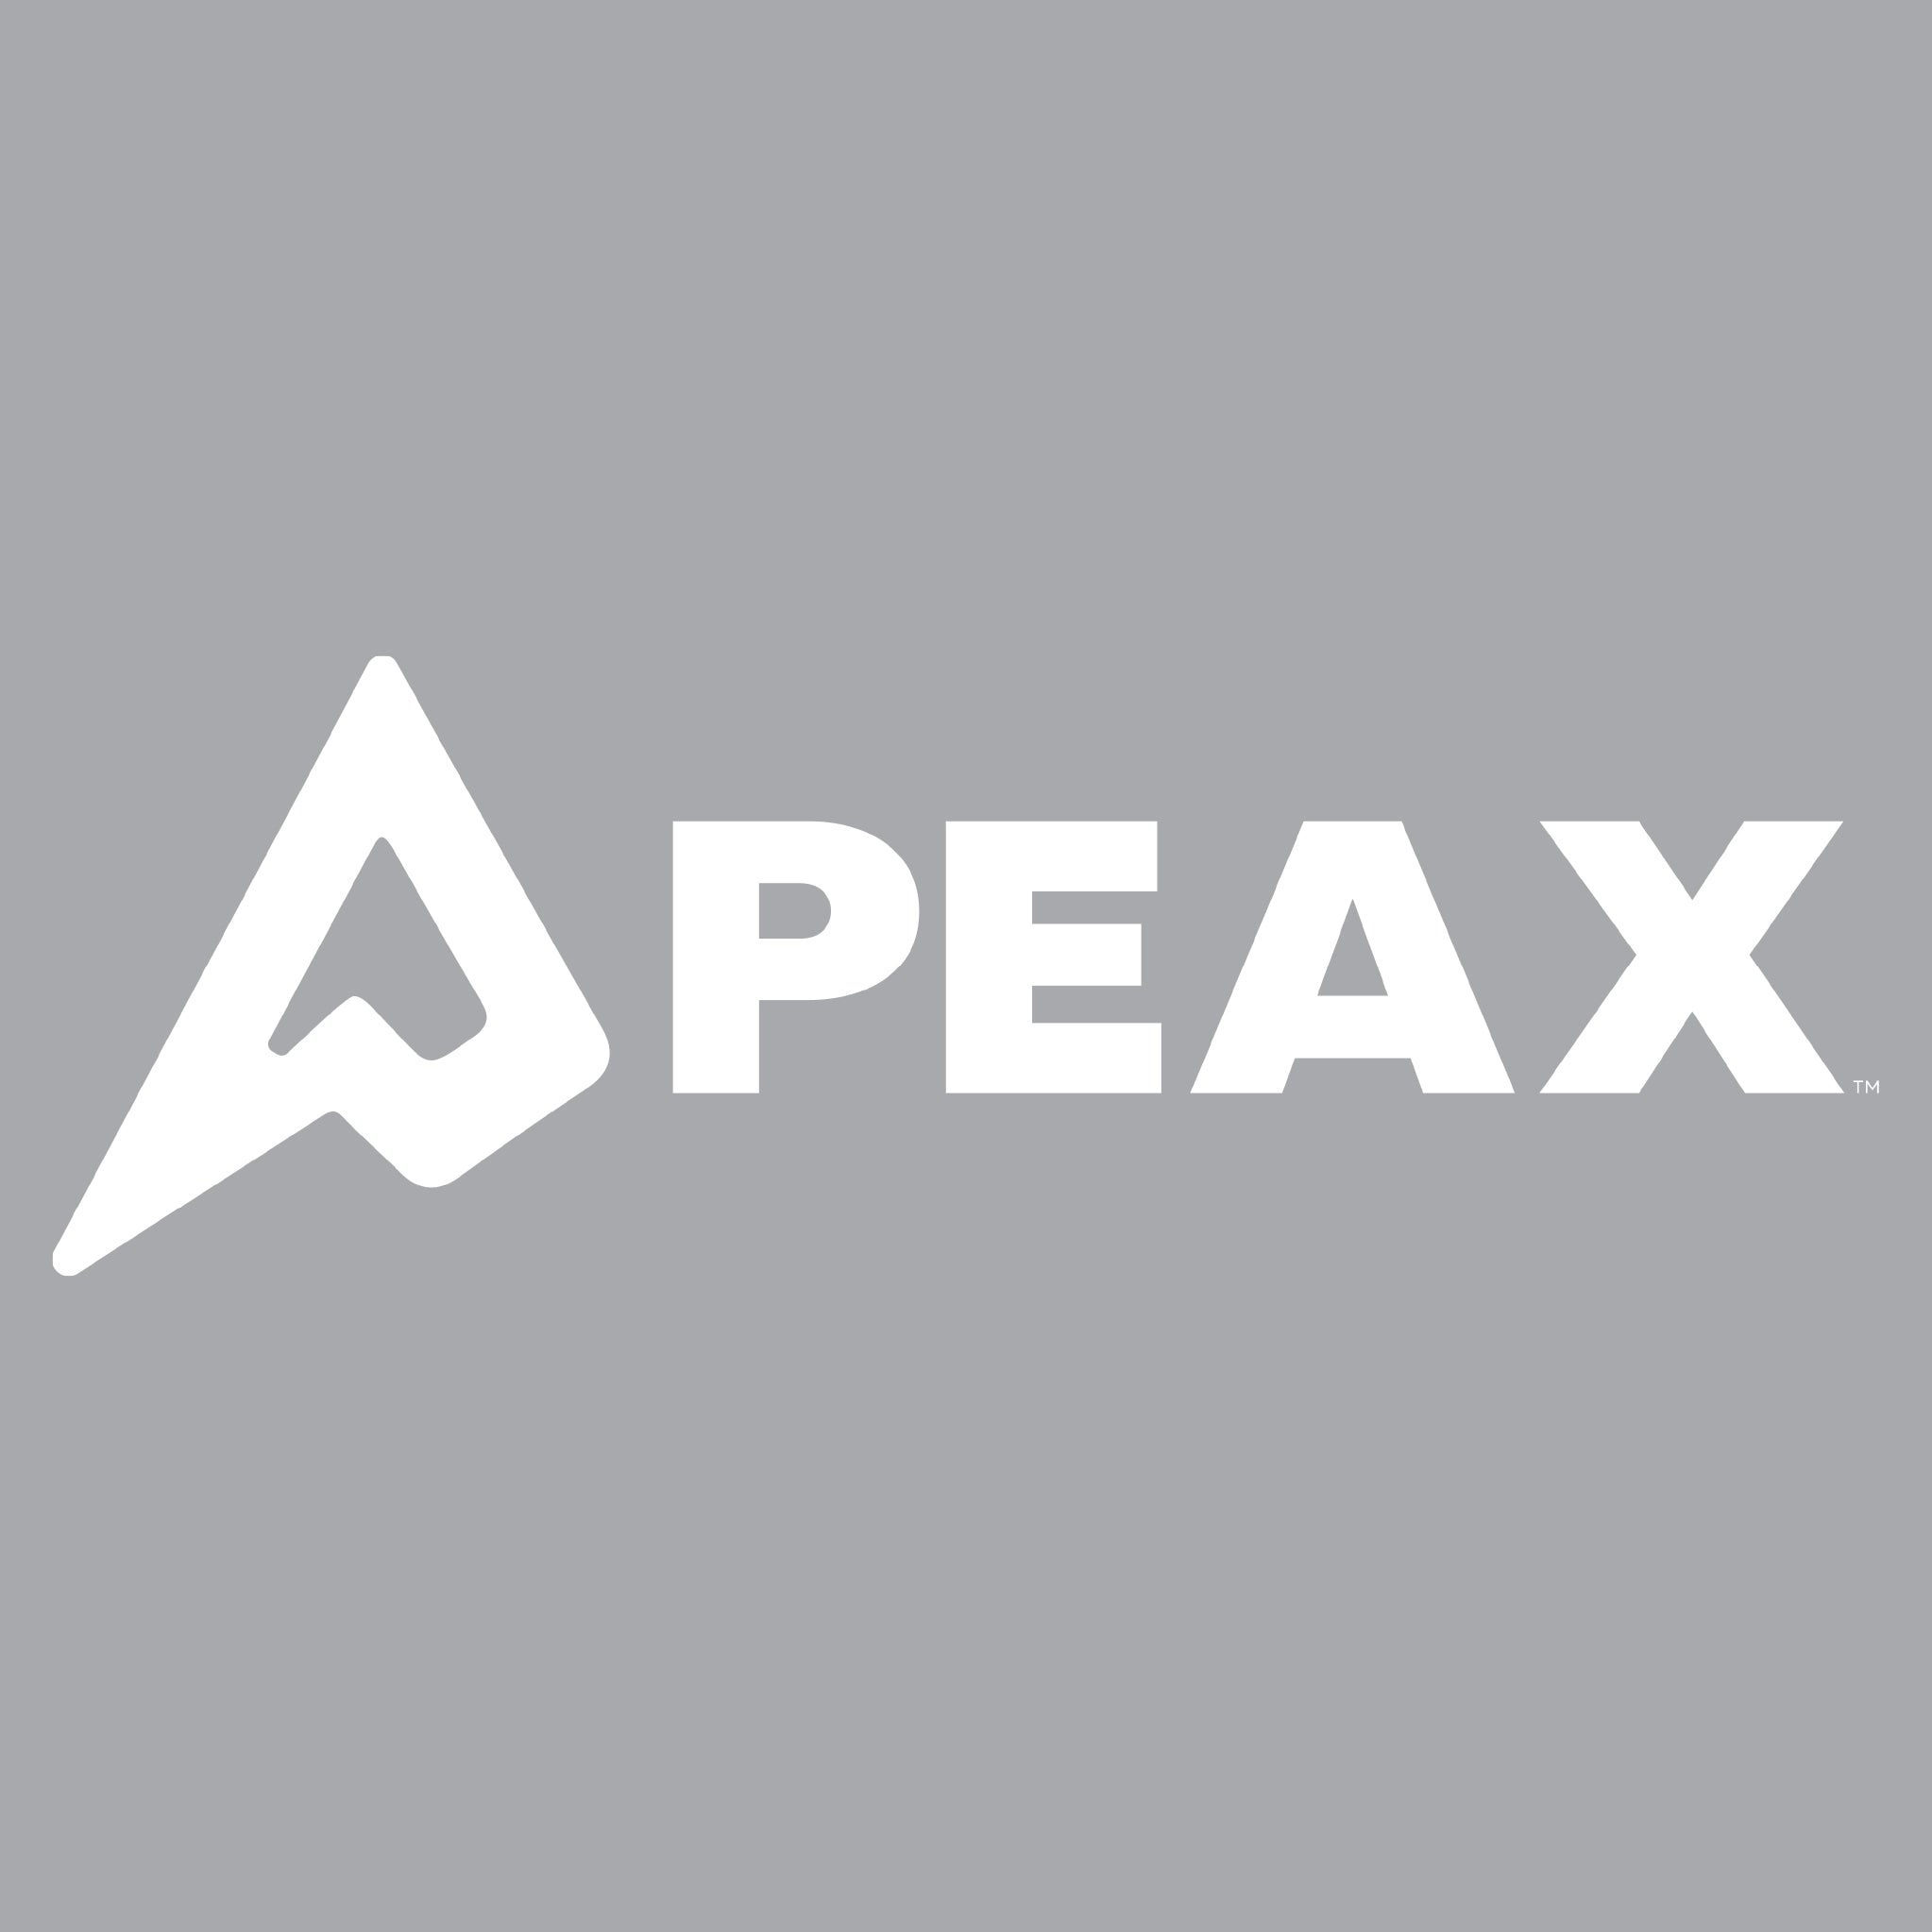 PEAX - TRANSFER DECAL STICKER (Small)